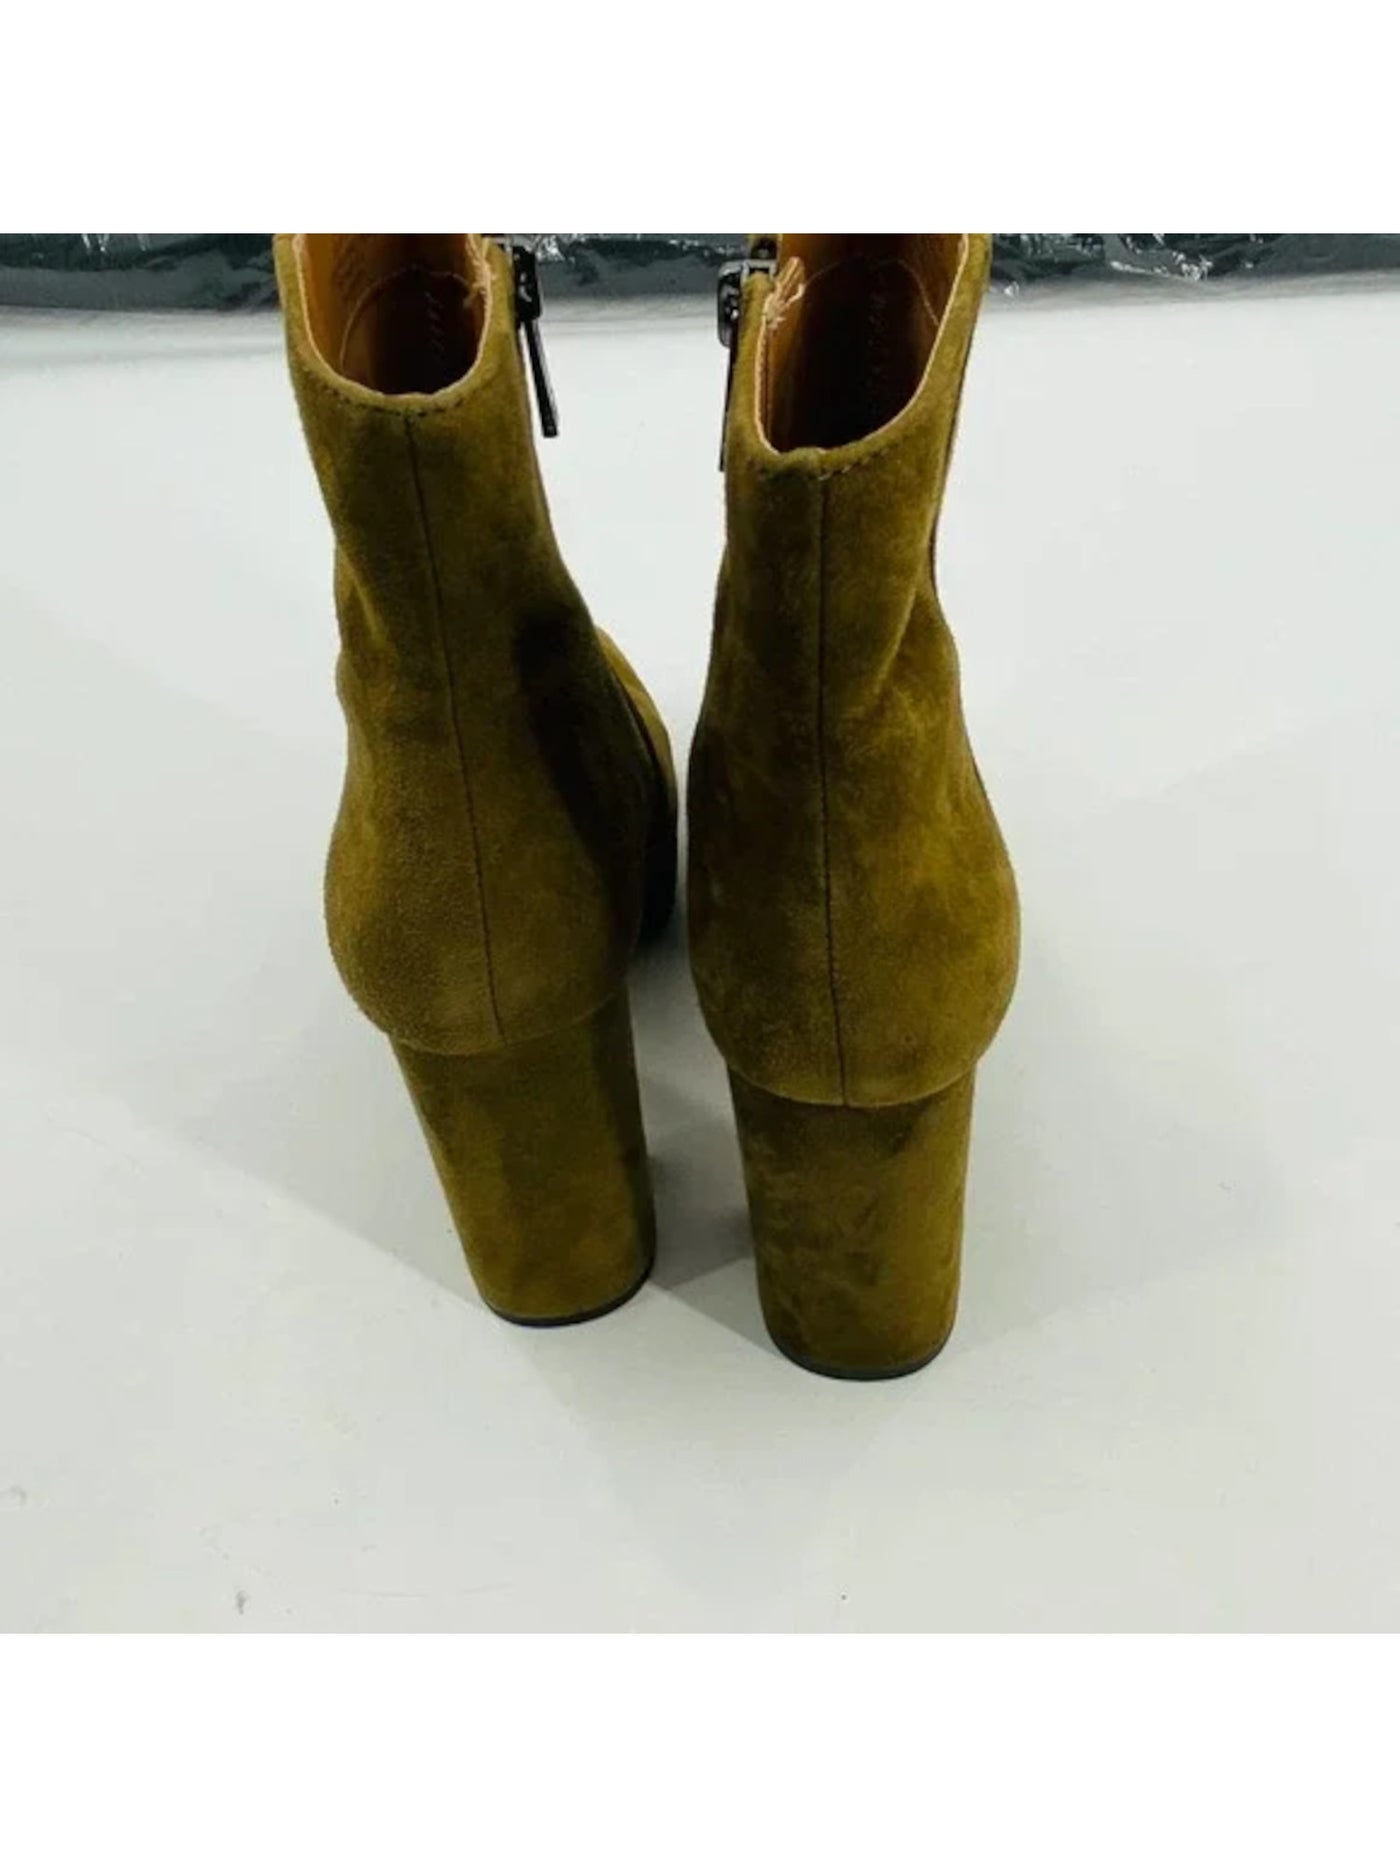 JESSICA SIMPSON Womens Green 1" Platform Comfort Kaiyah Square Toe Block Heel Zip-Up Leather Dress Booties 8 M